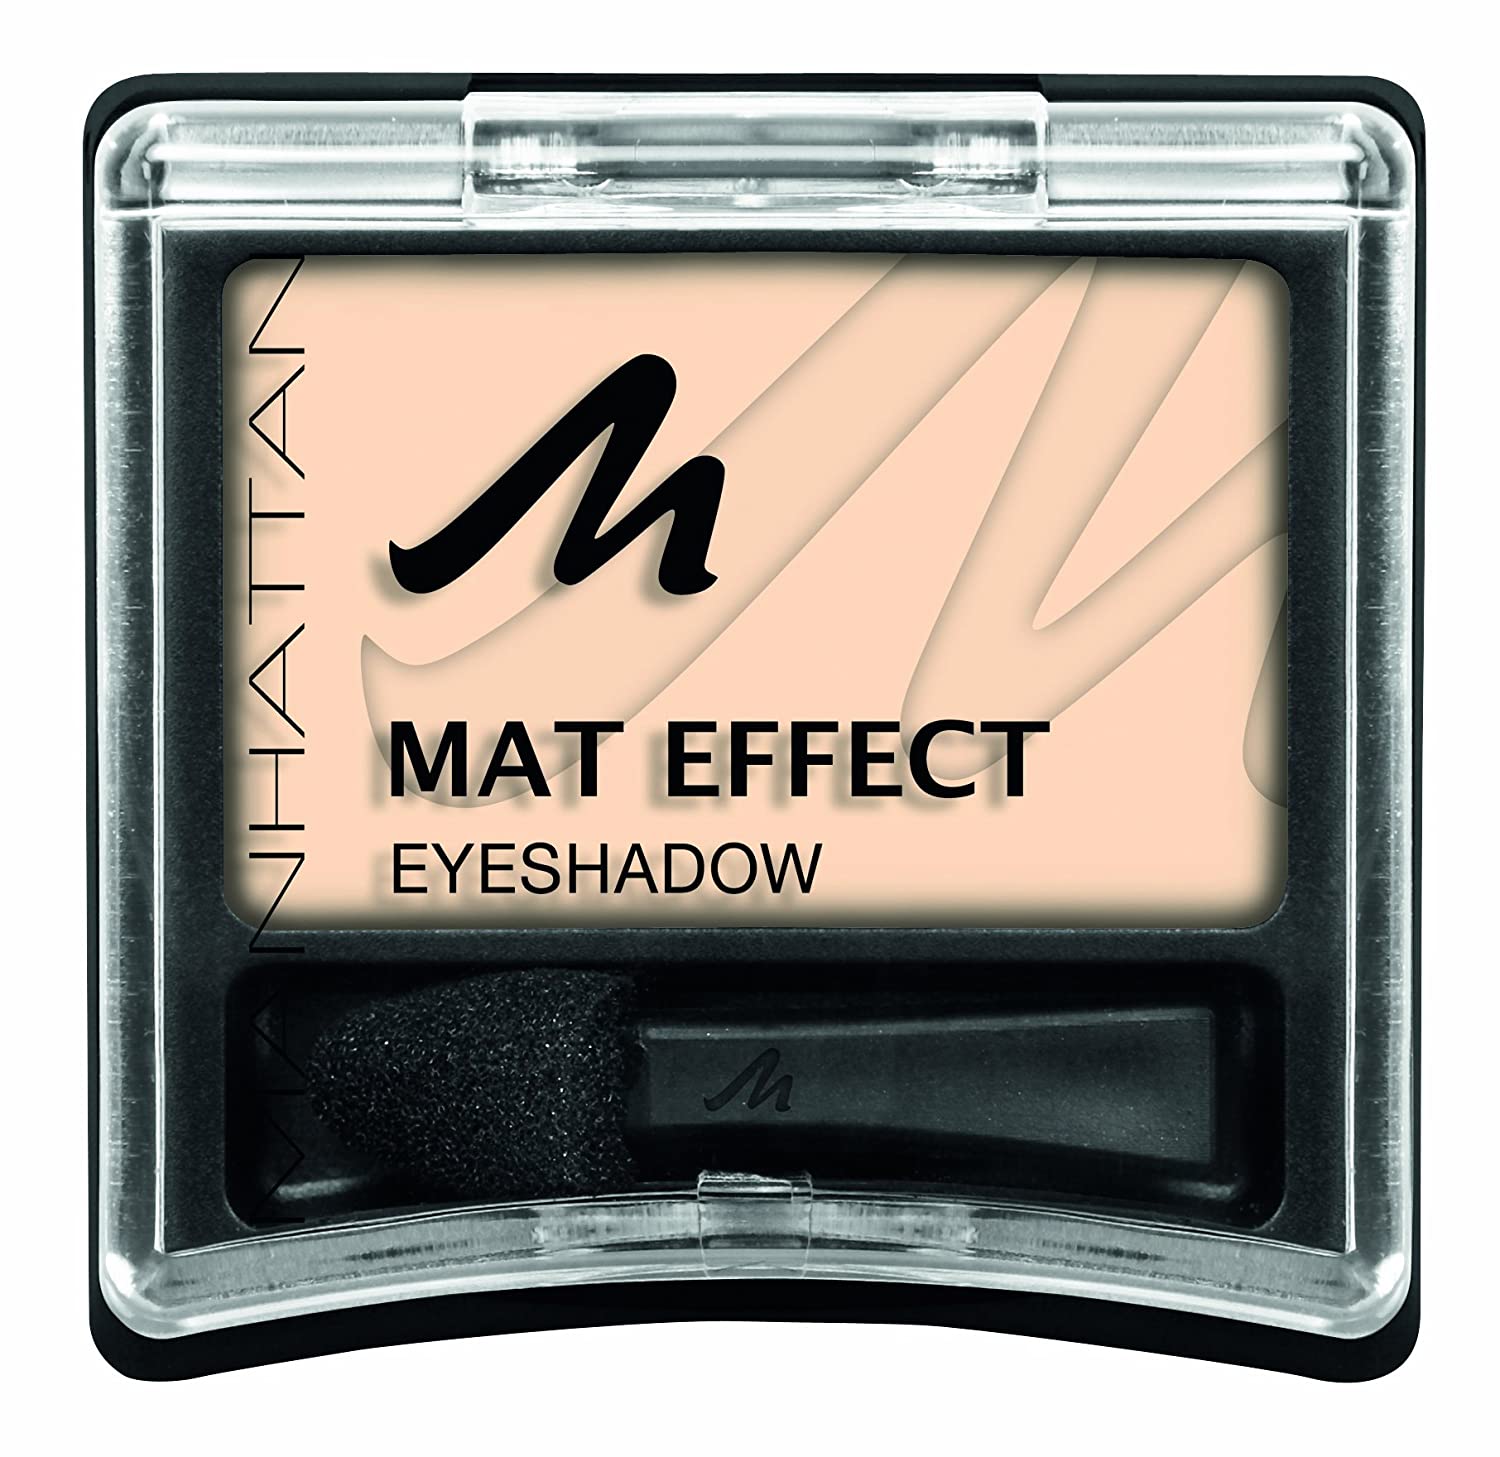 Manhattan Matte Effect Mono Eye Shadow in Shade 29 °C 1.6 g Pack of 1